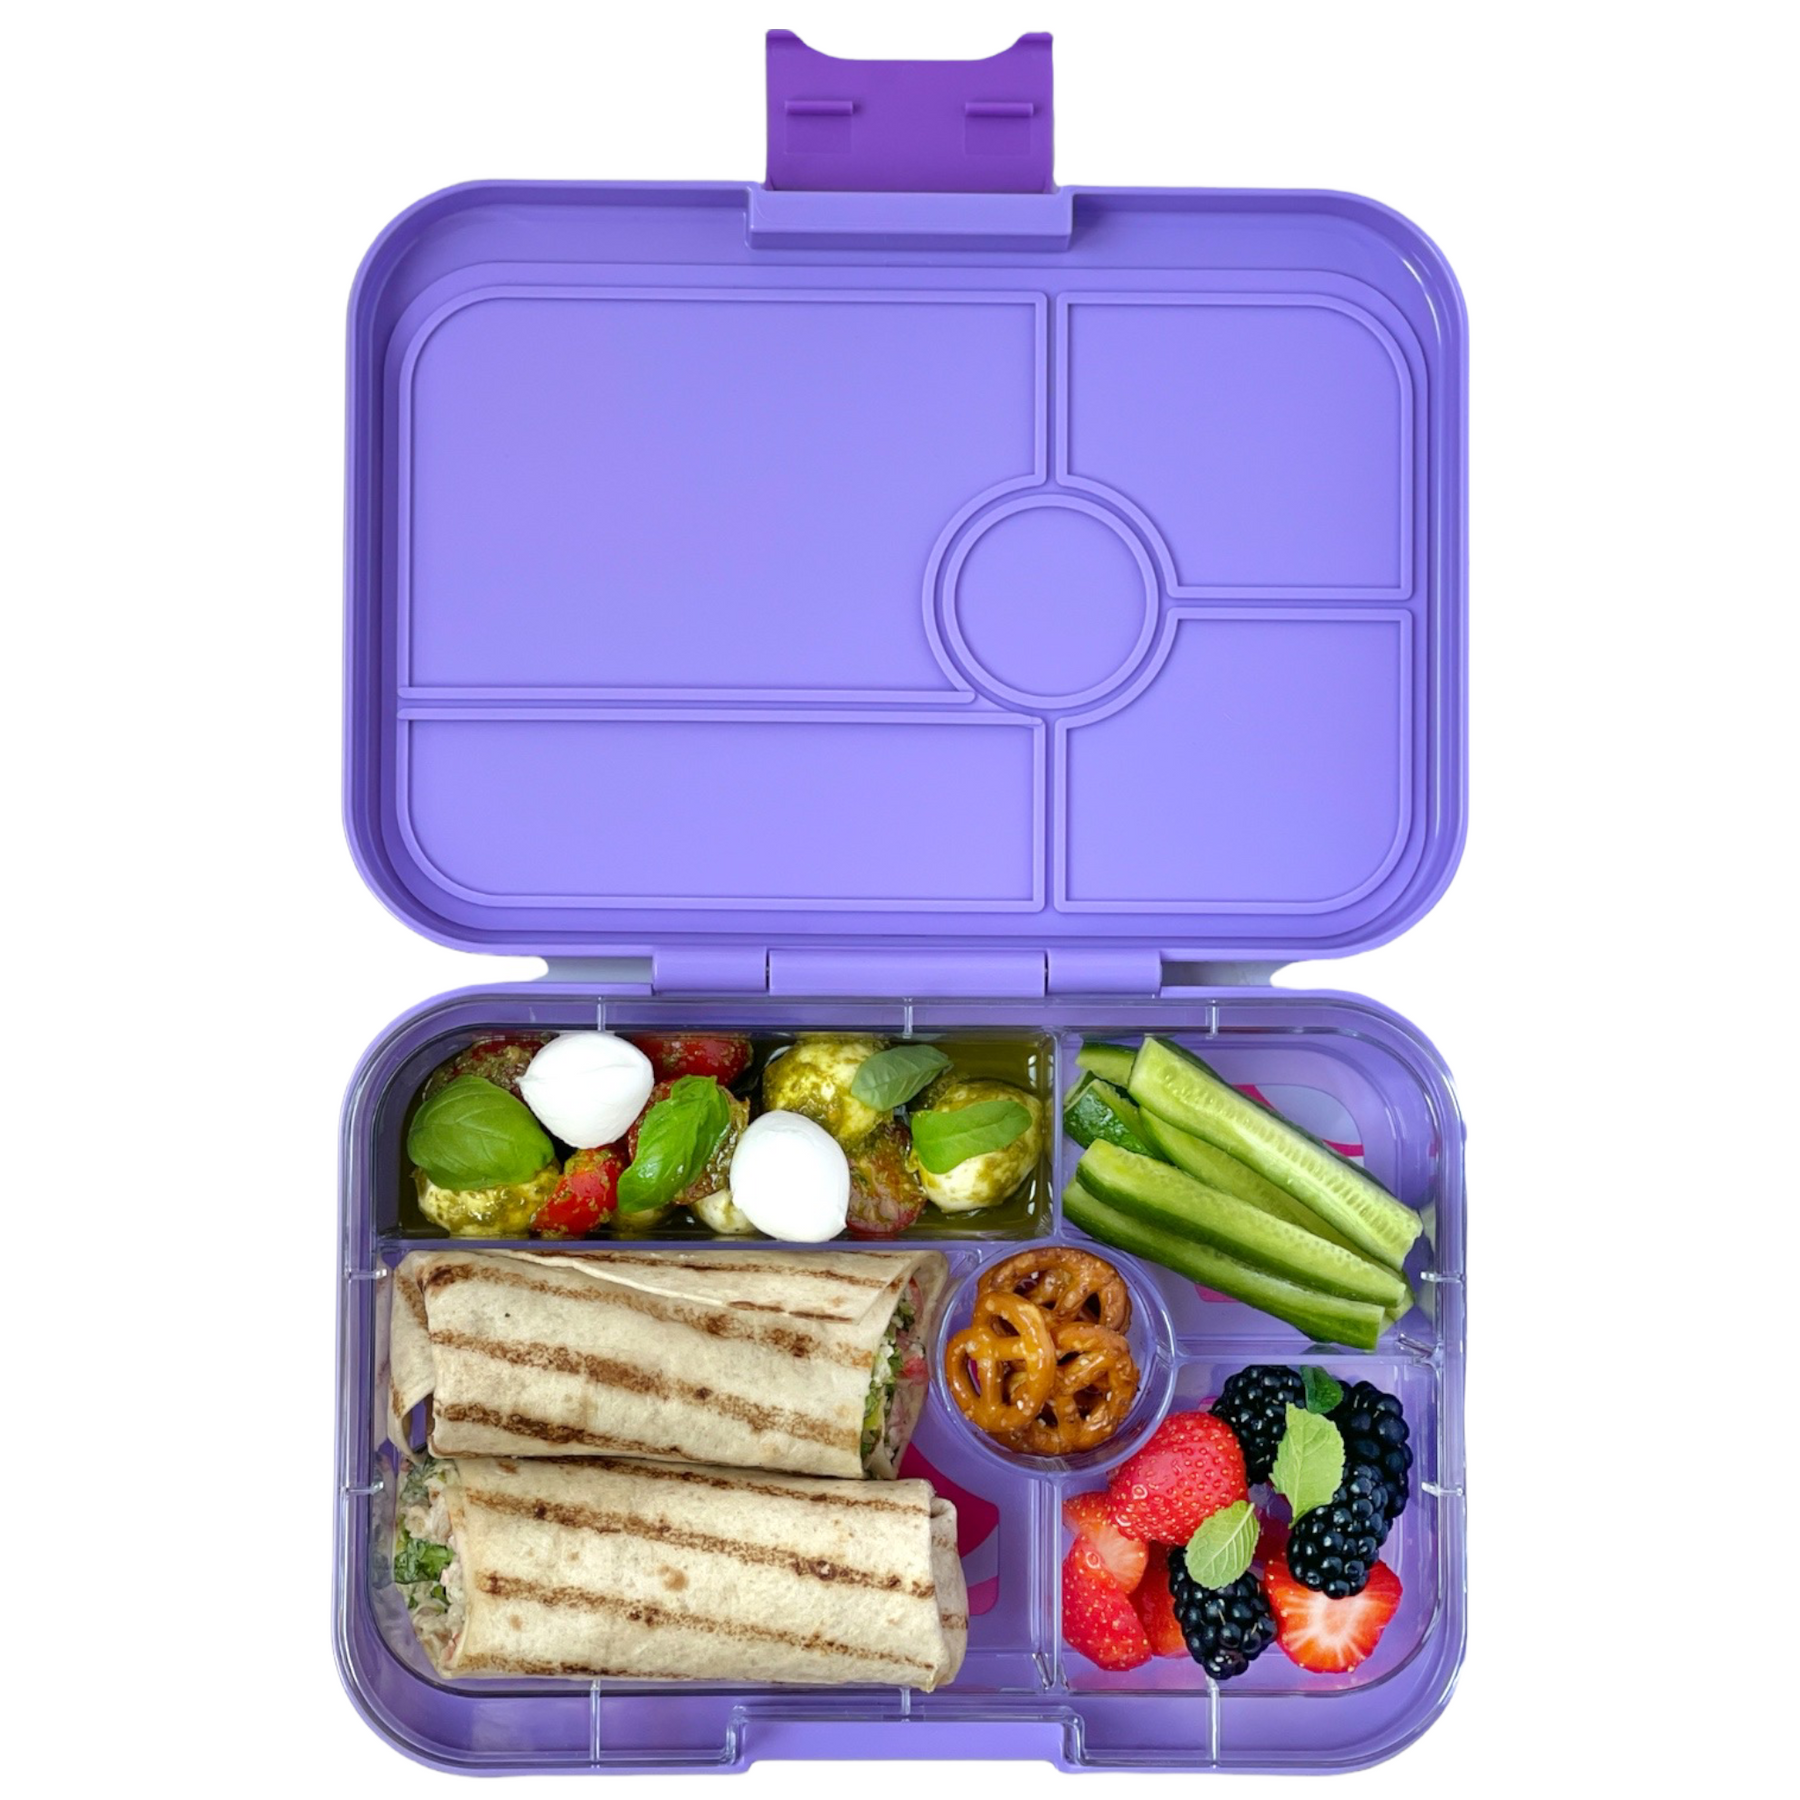 Yumbox Tapas Bento Lunchbox (5 Compartments) - Seville Purple